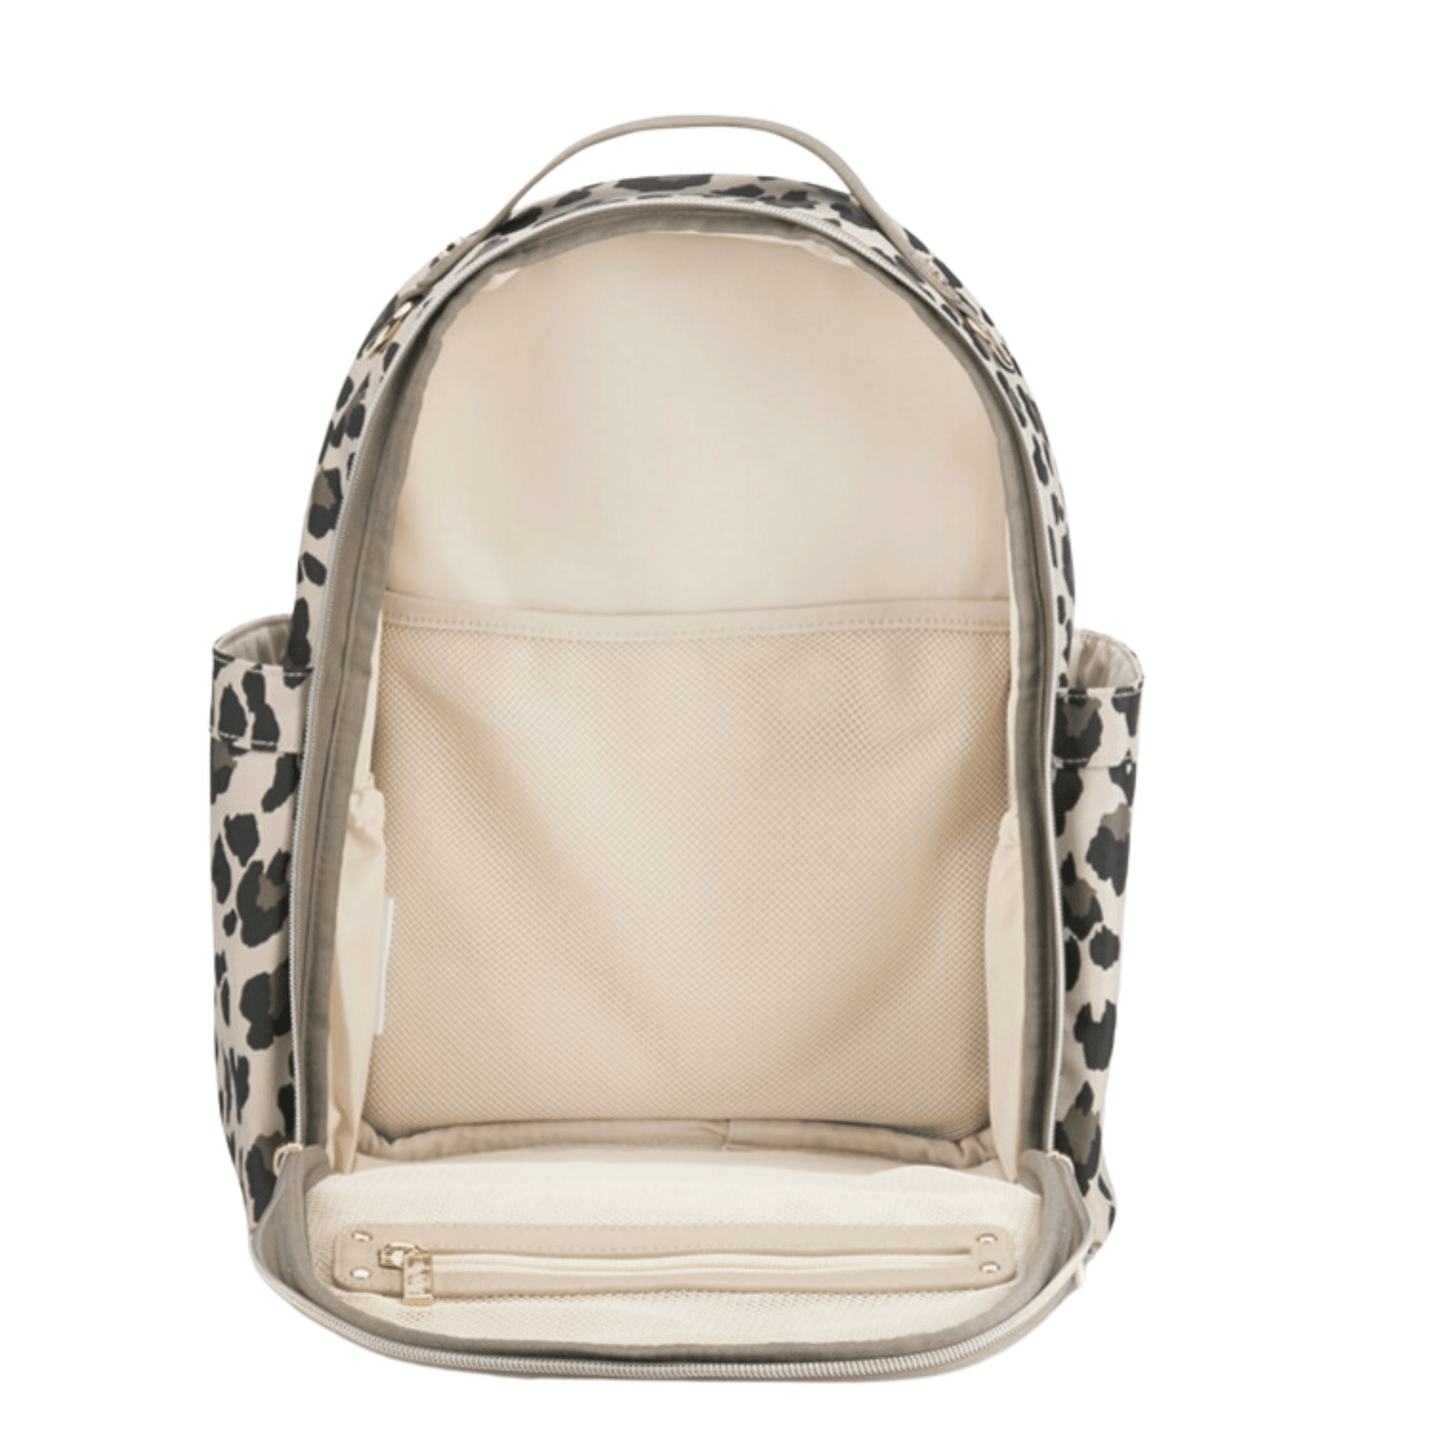 Itzy Ritzy Diaper Bags Leopard Mini Backpack